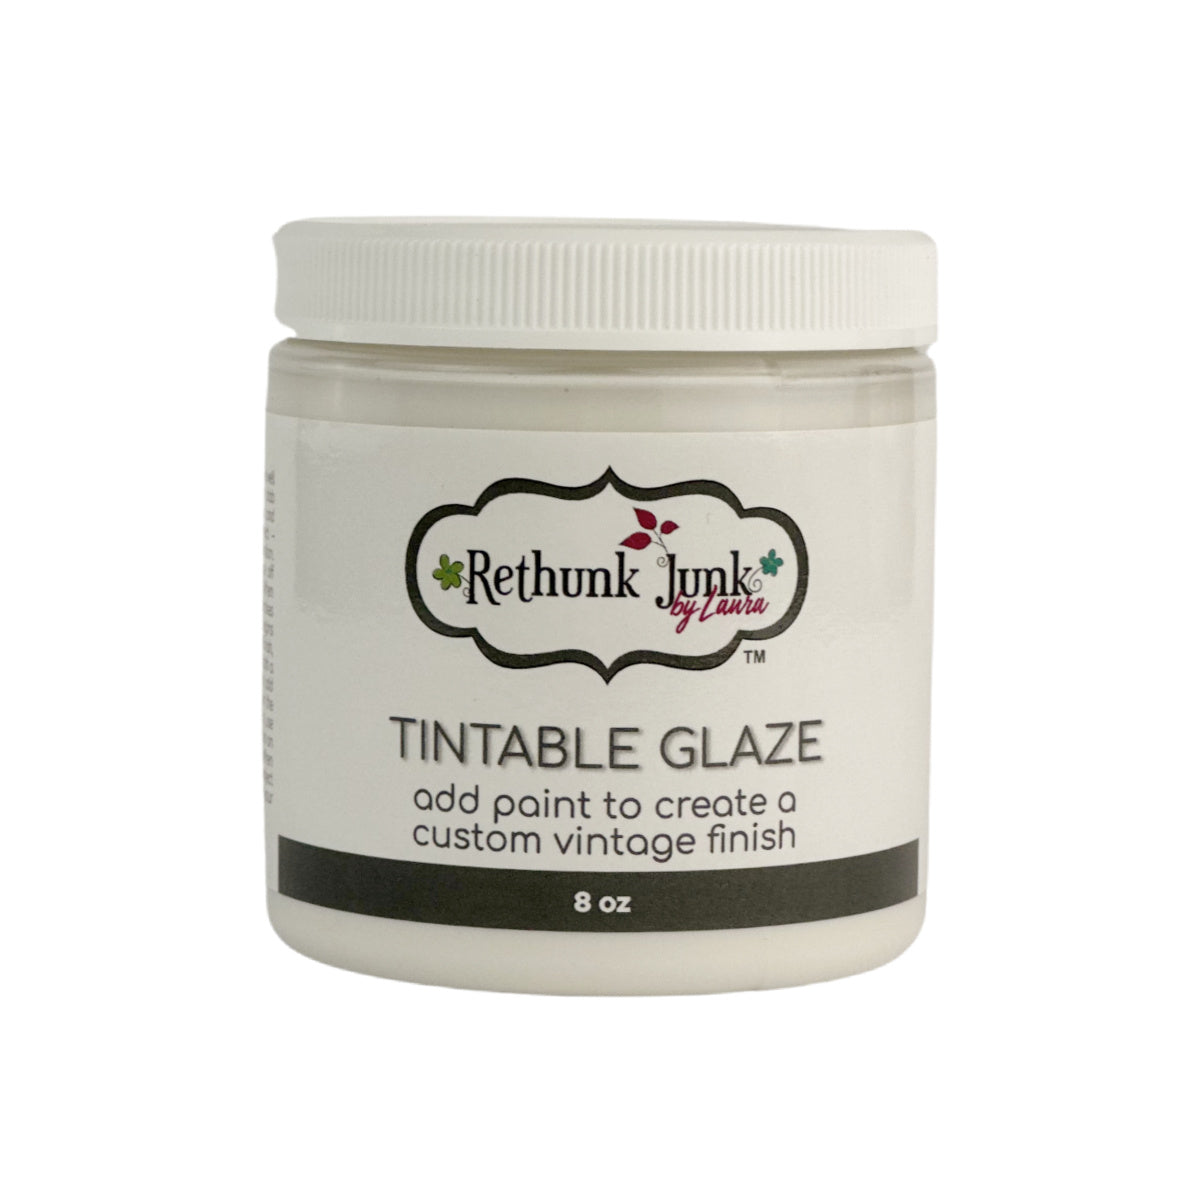 Tintable Glaze